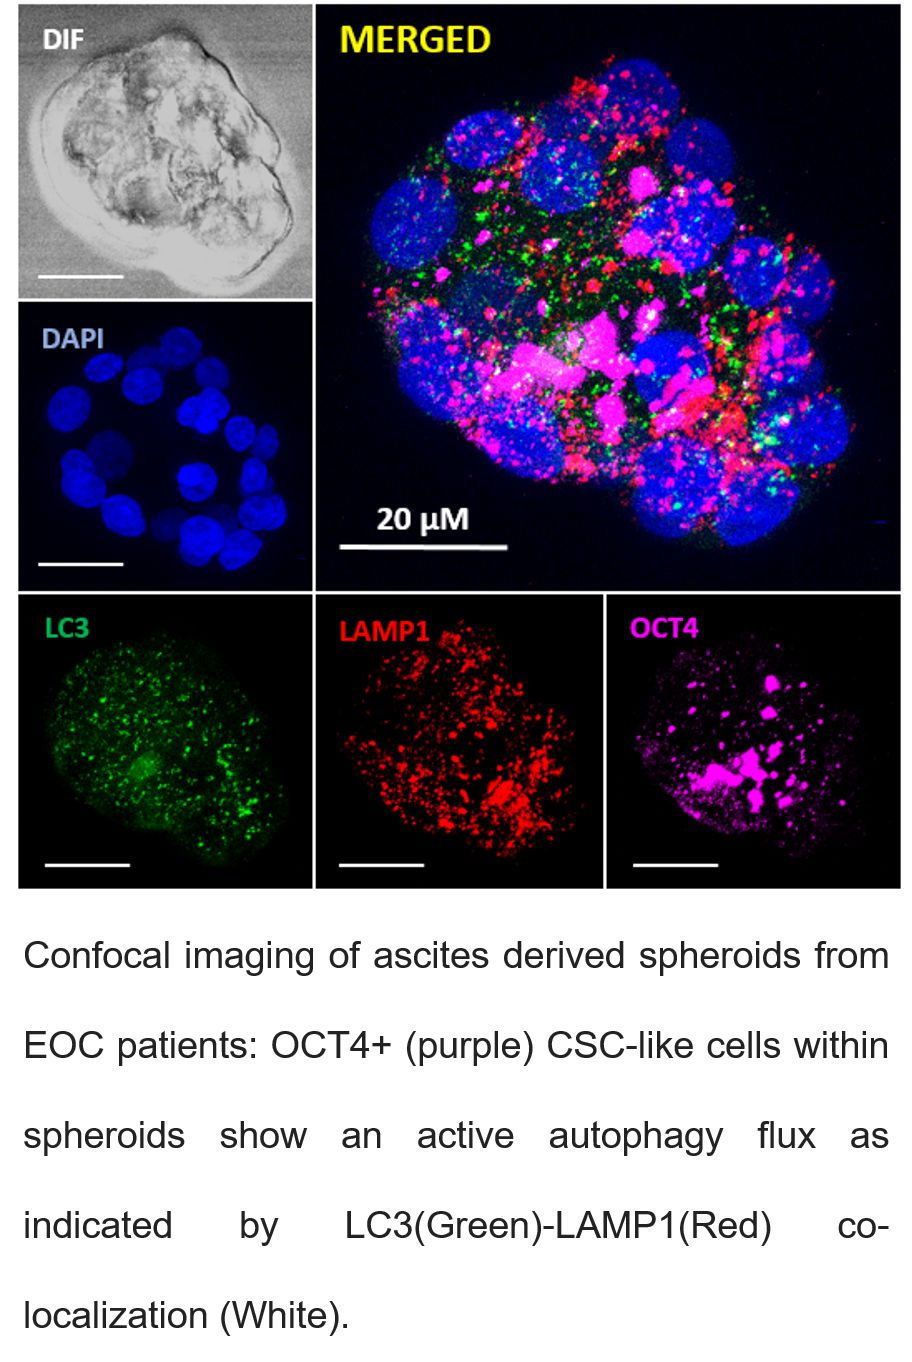 Investigating the role MAPK-ERK & PI3K-AKT signalling on autophagic flux in Ovarian Cancer Stem Cells 